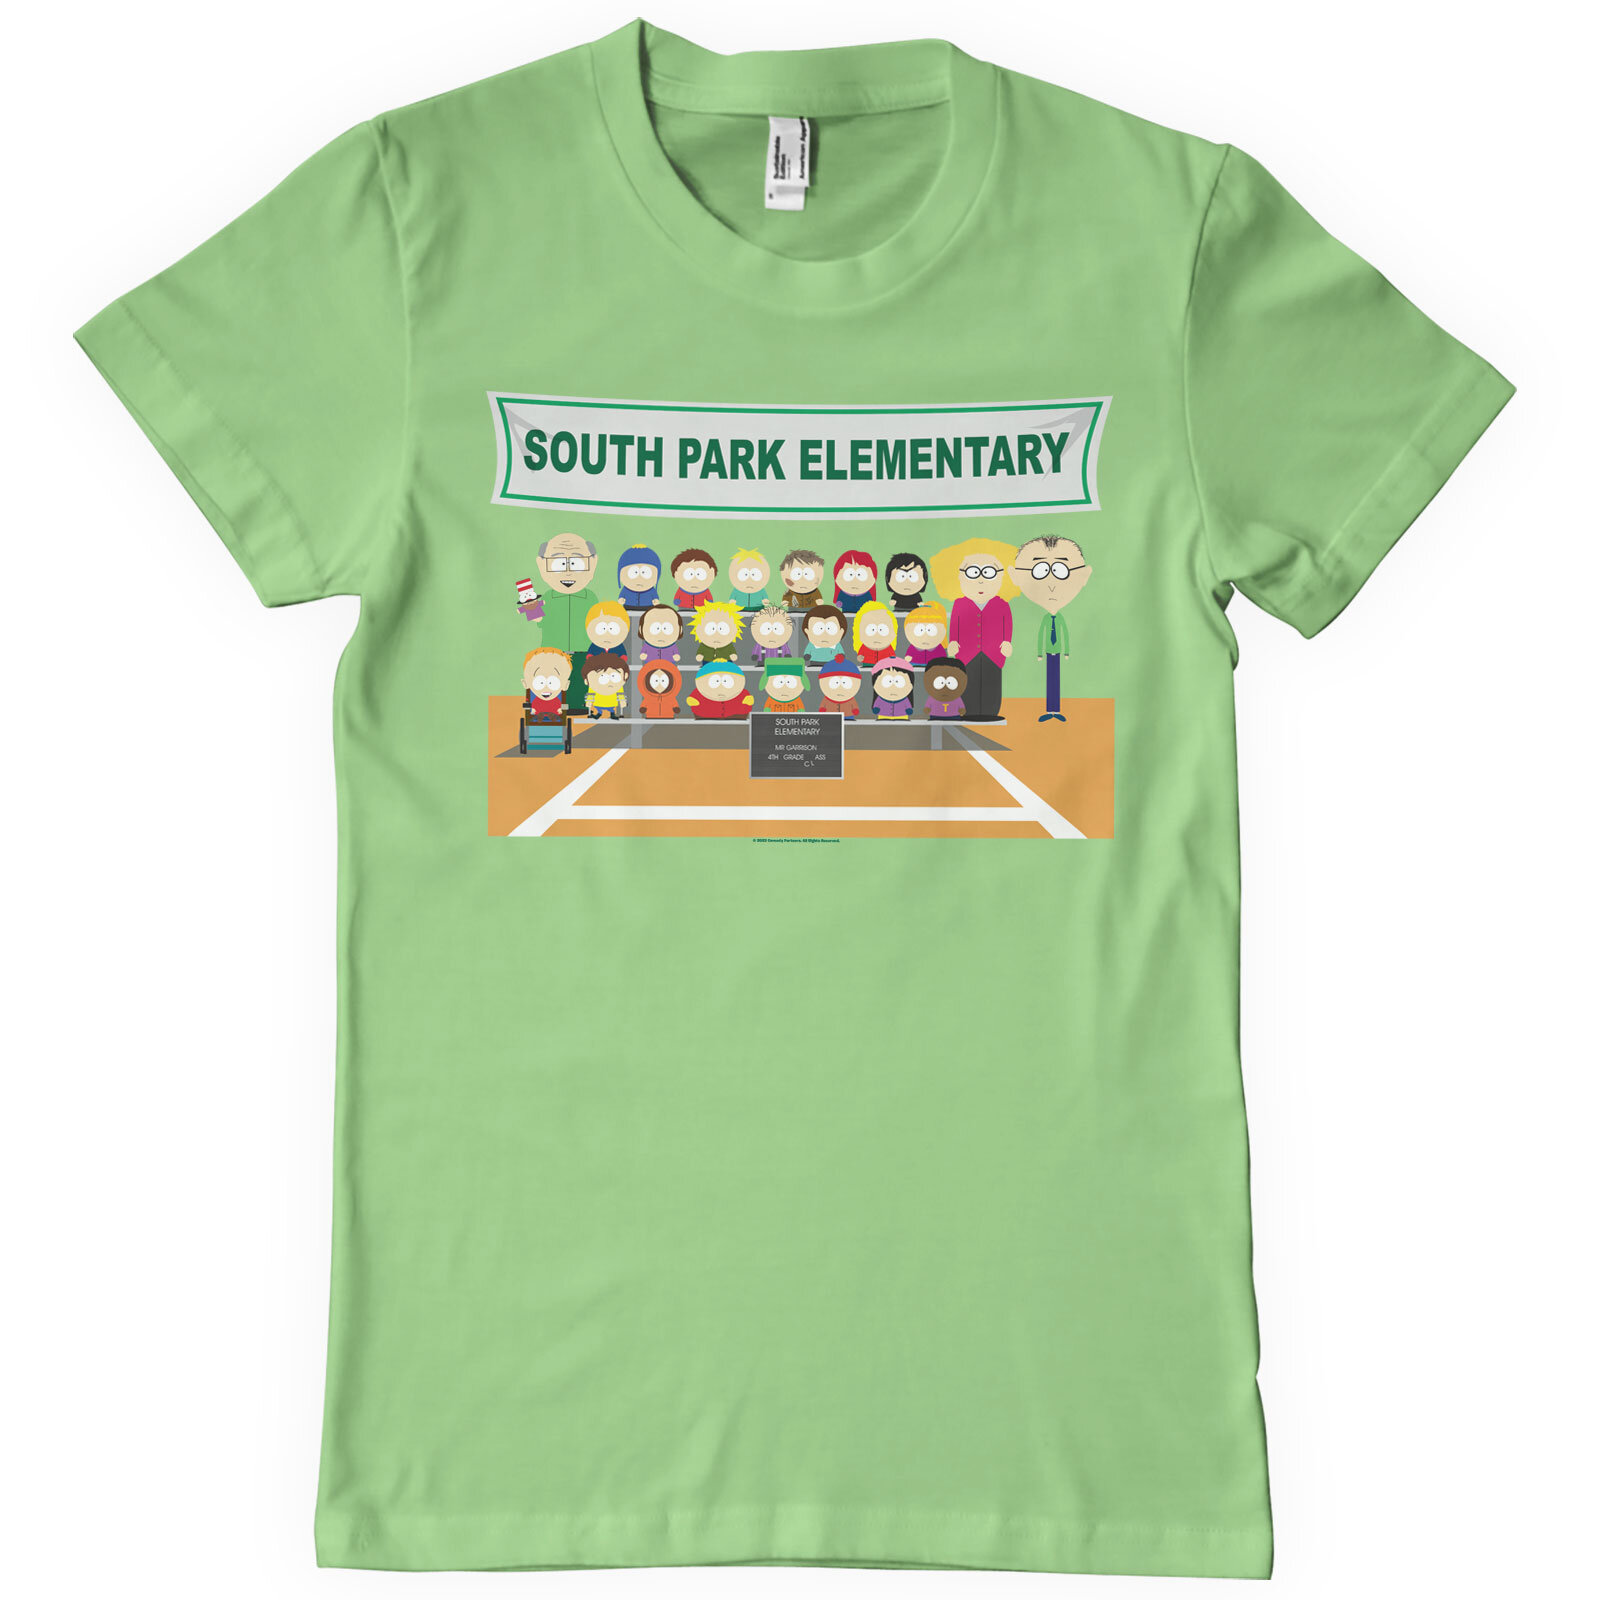 South Park Elementary T-Shirt